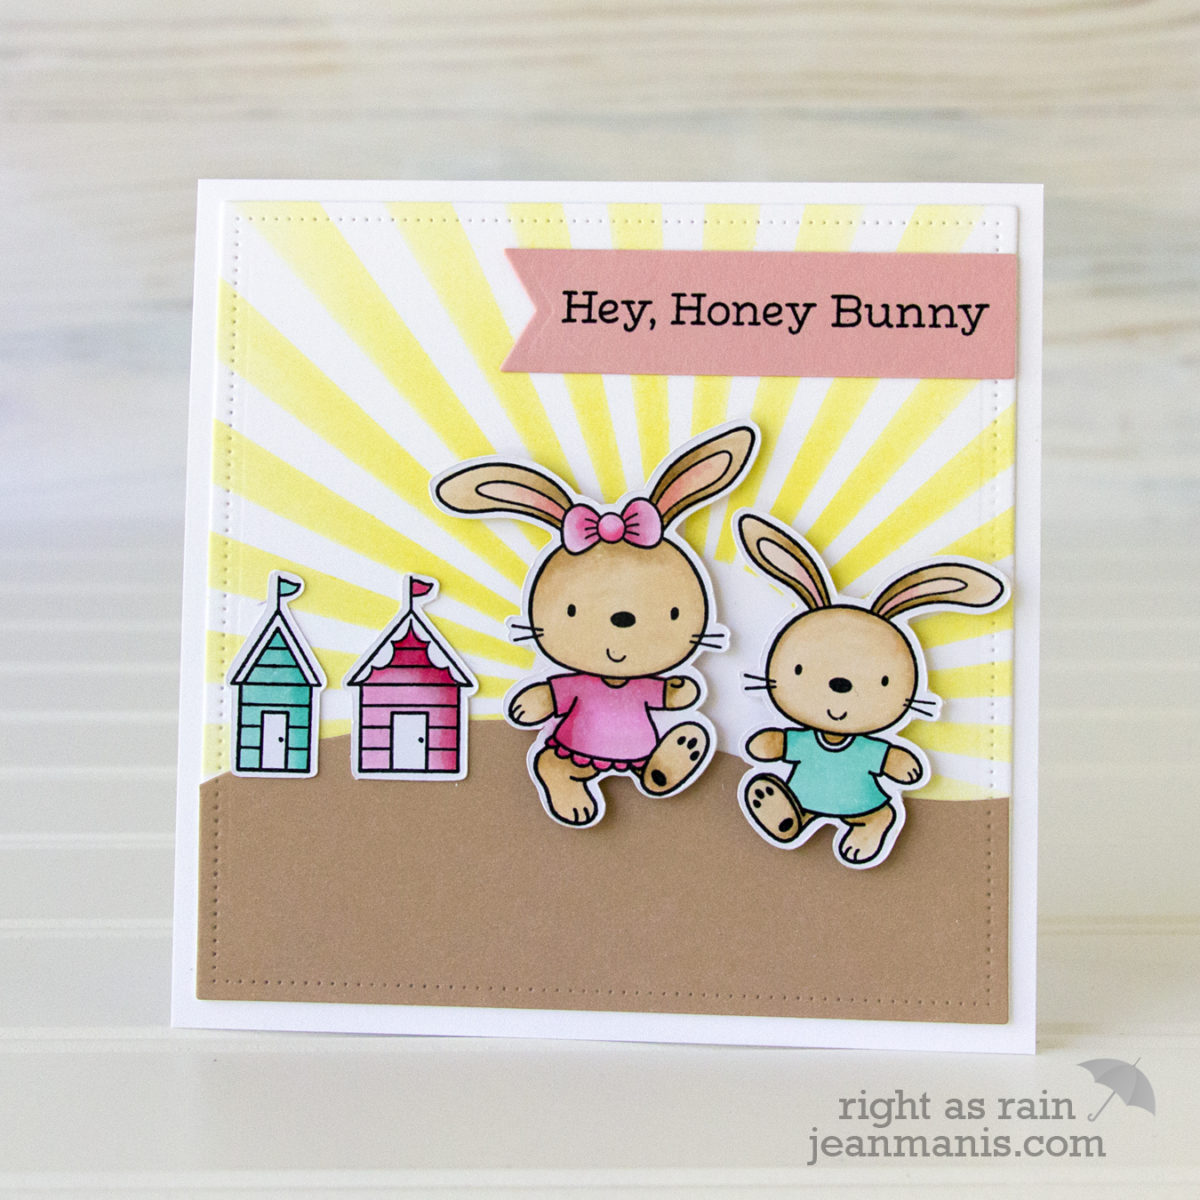 My Favorite Things – Hey, Honey Bunny